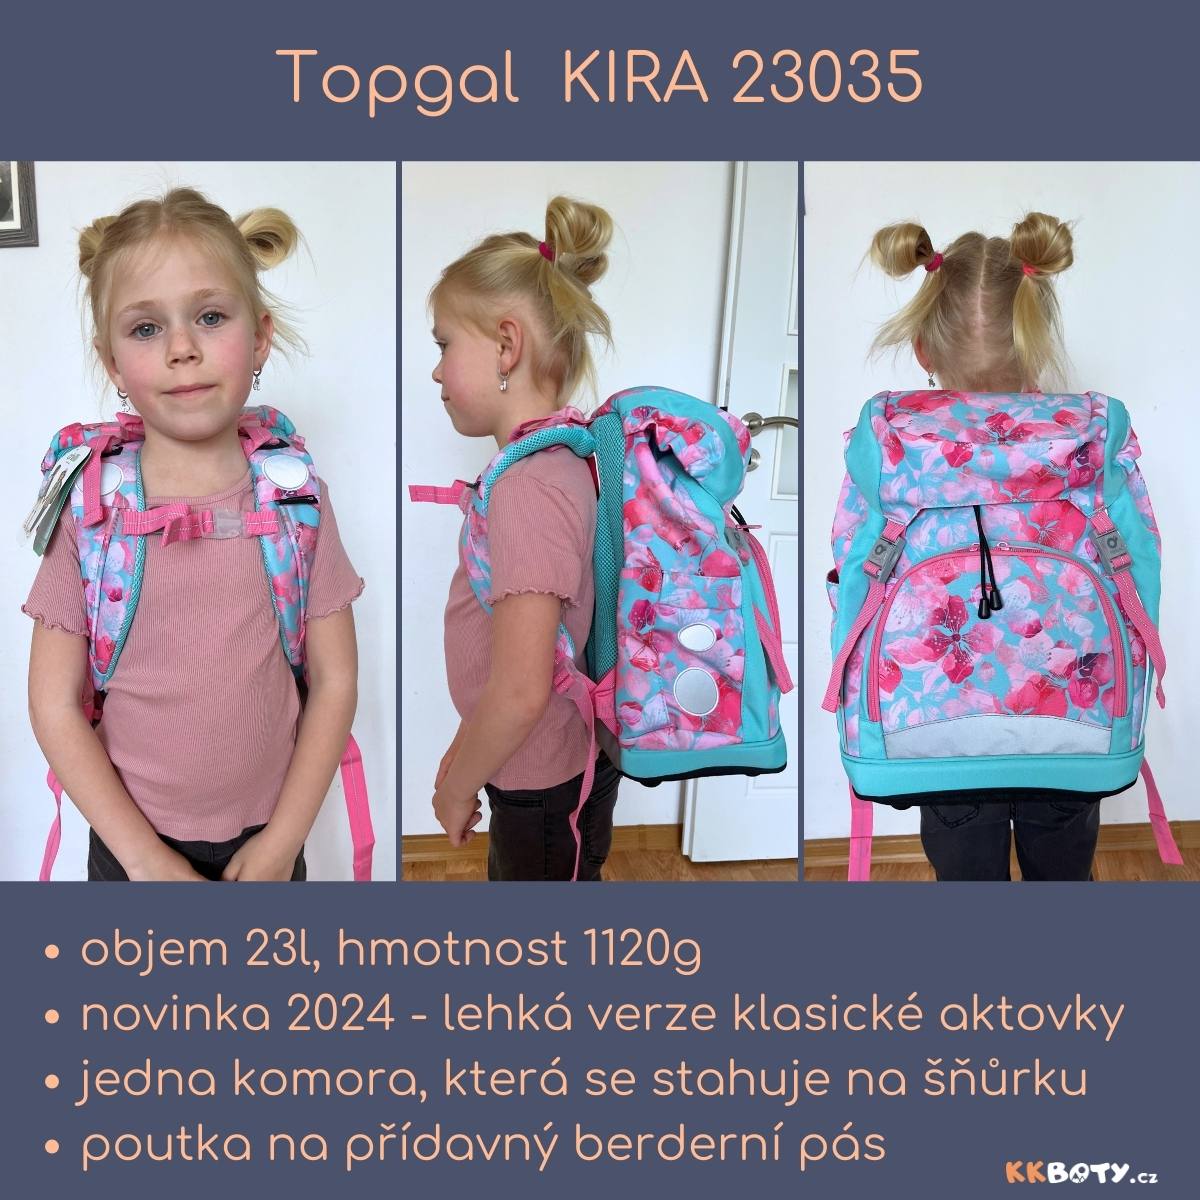 Školní aktovka Topgal KIRA 23035